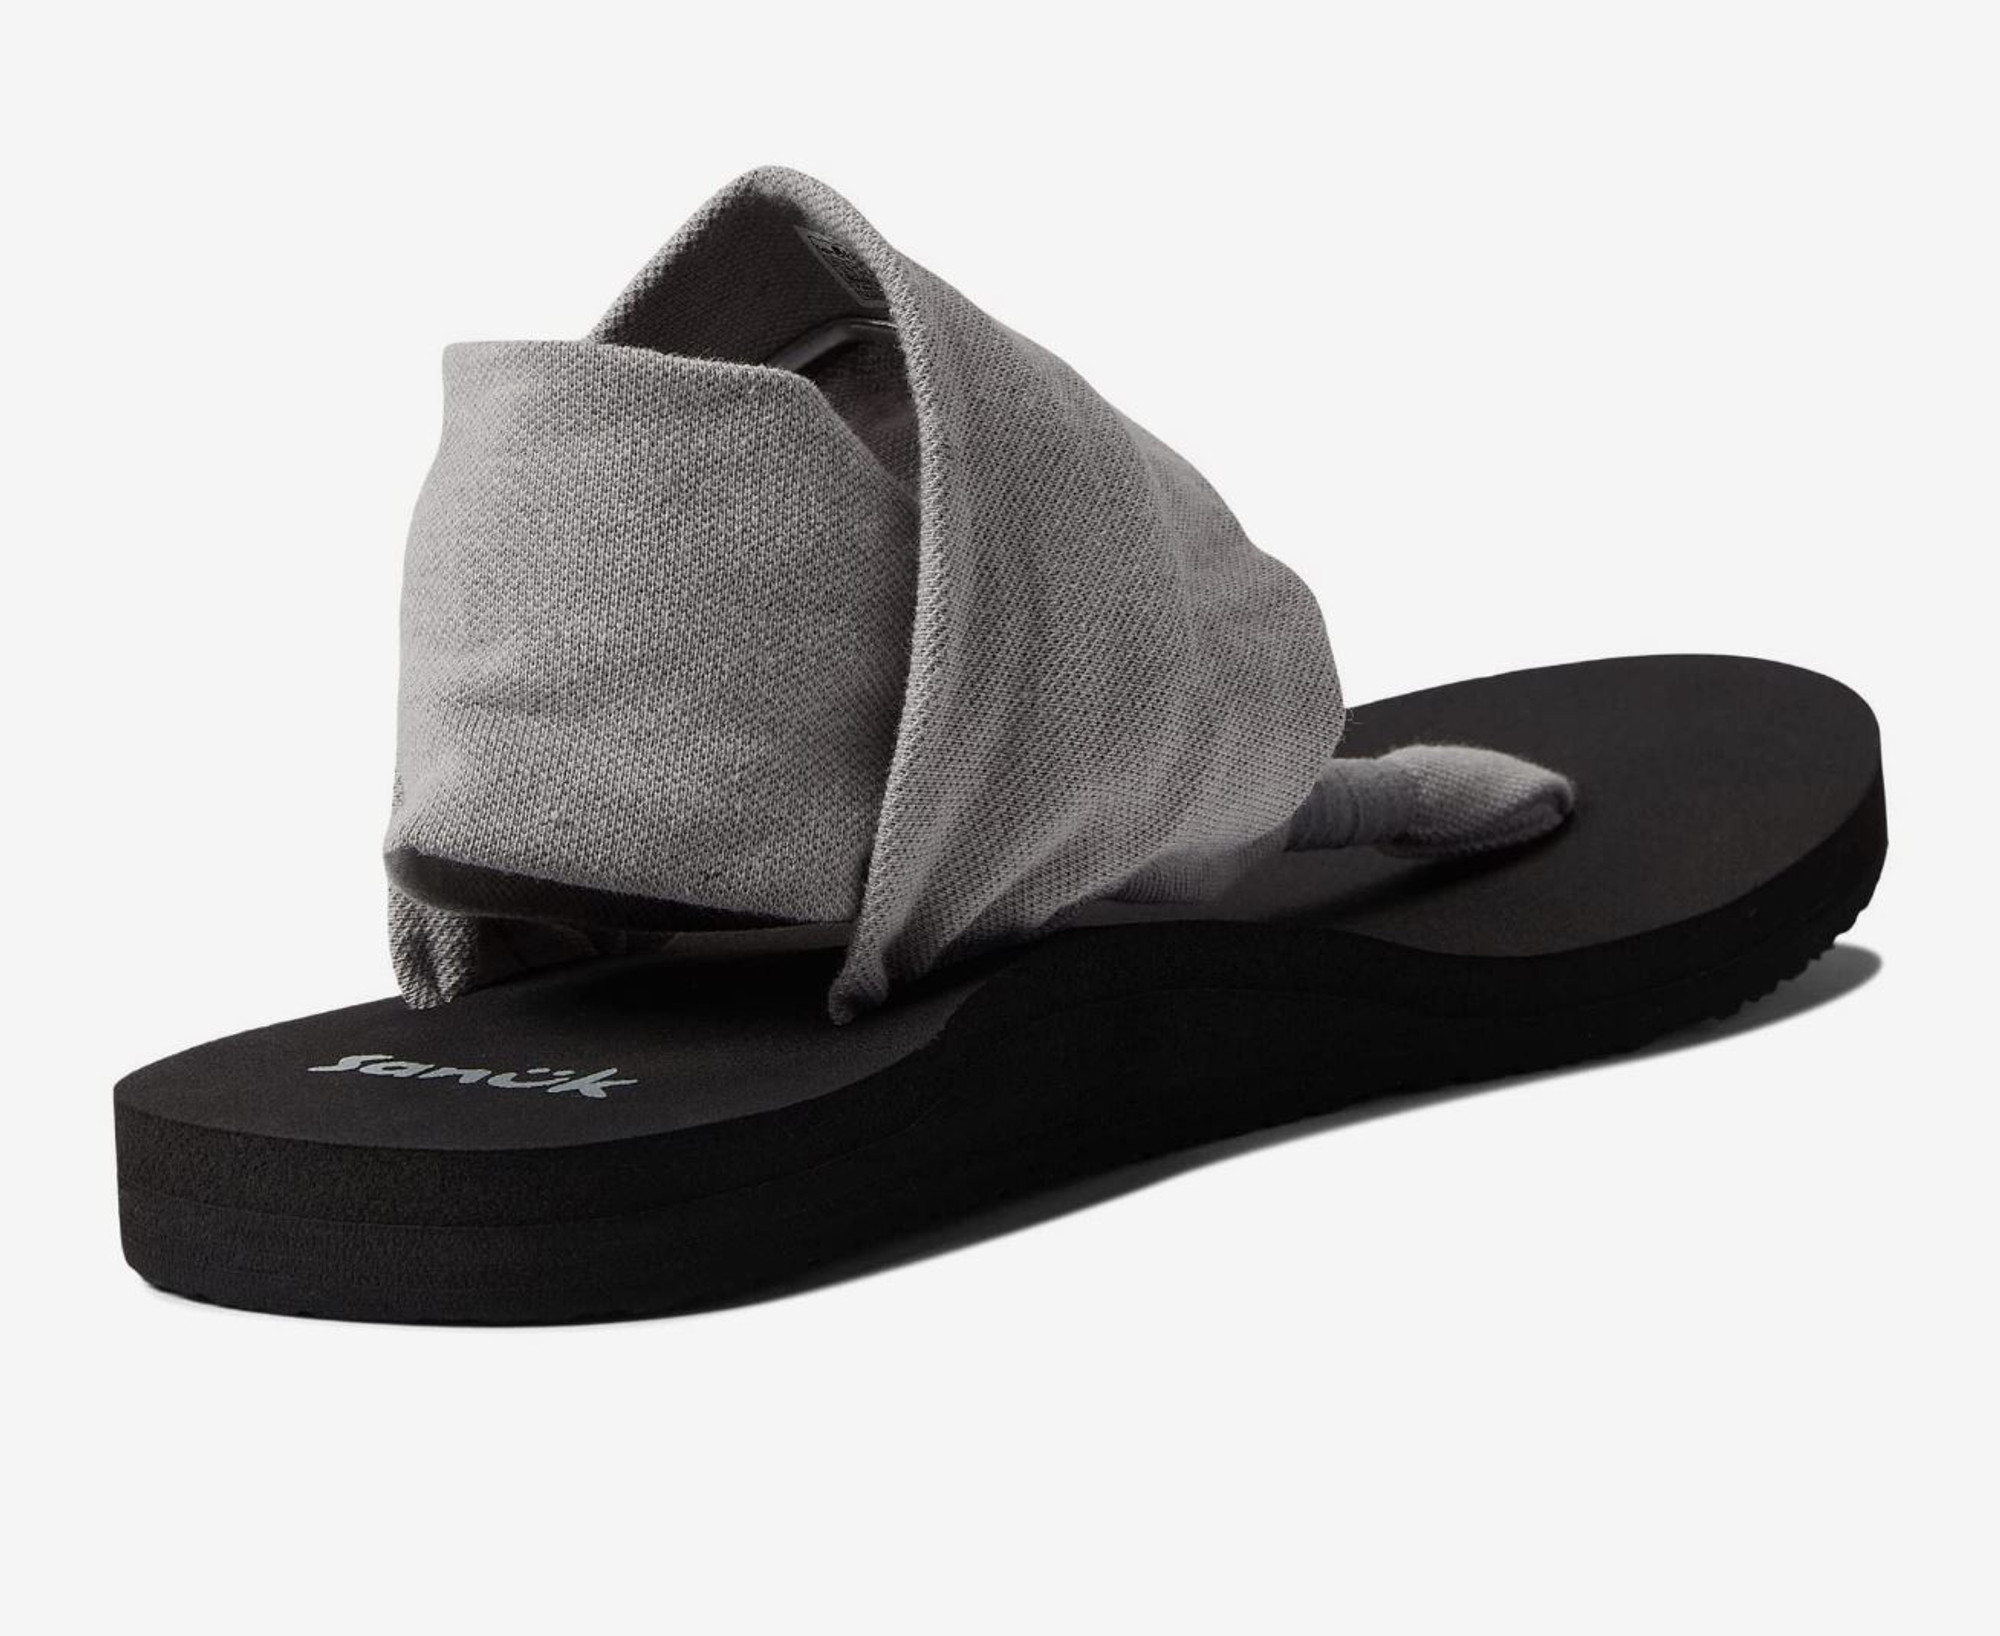 Sanuk Yoga Shoes Flats Flip Flops Sling Sandals Women's Size 9 Black and  Gray